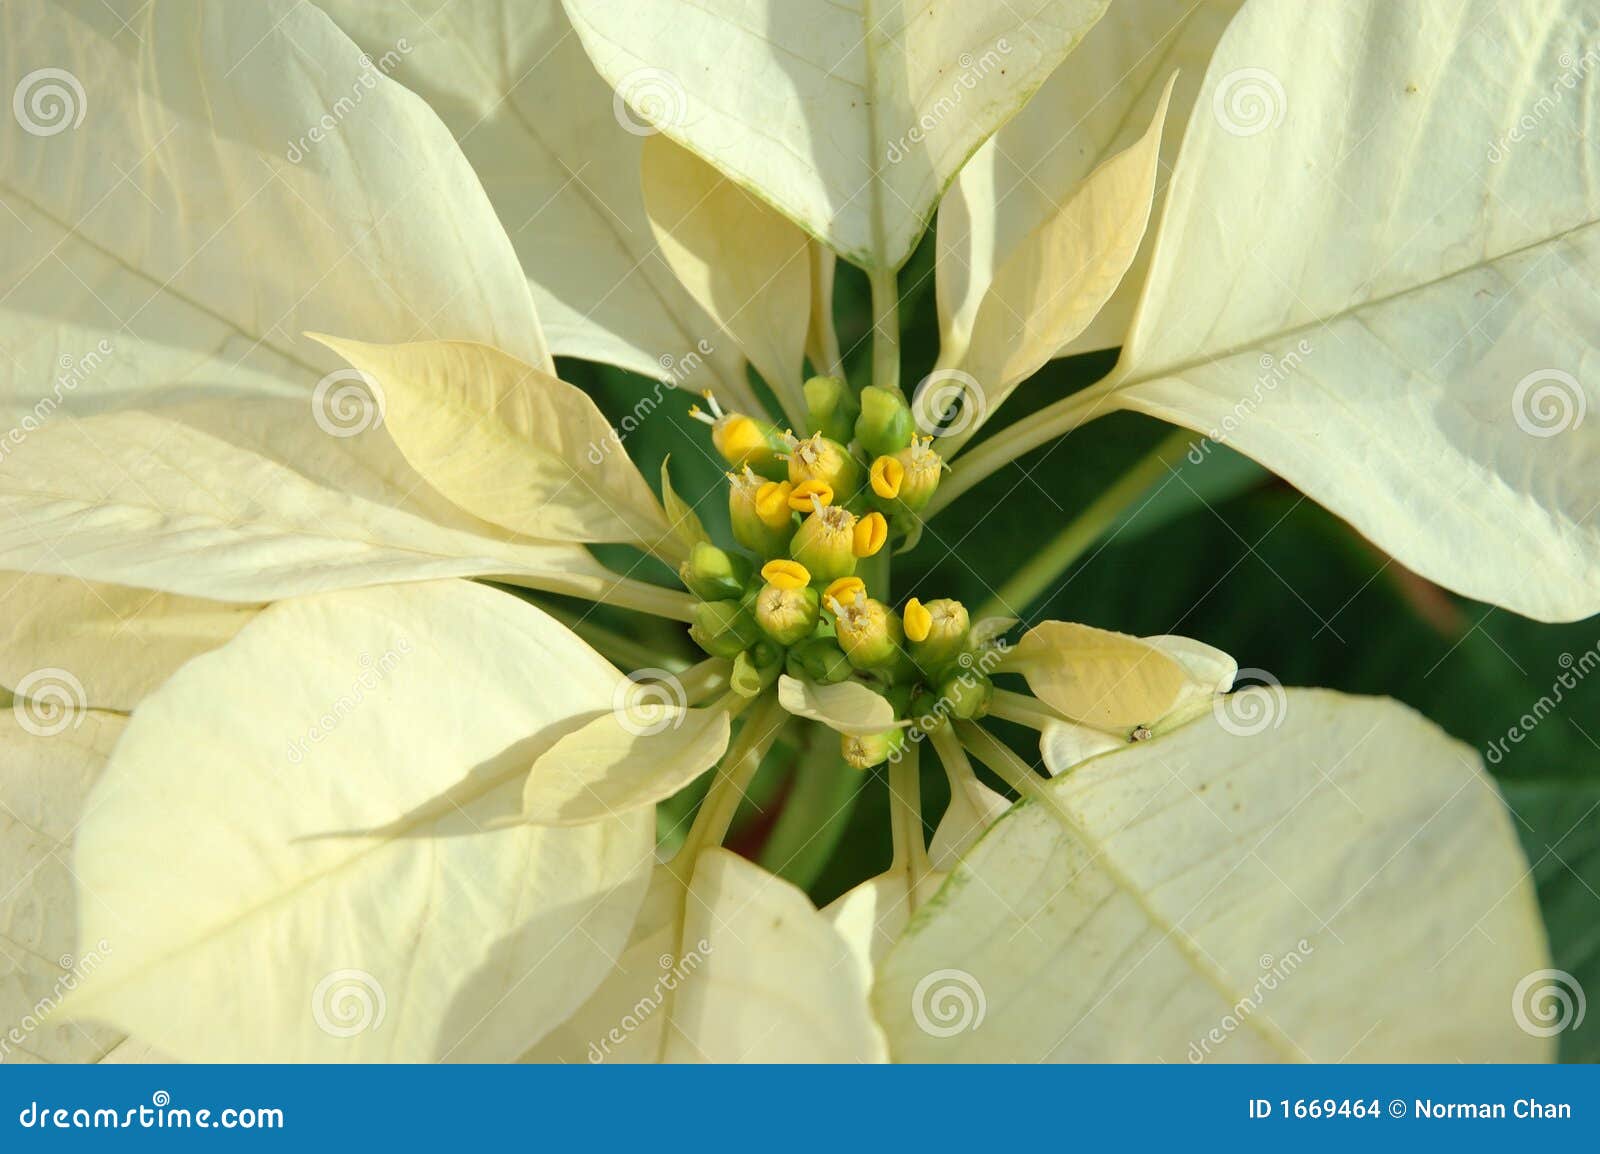 Yellow poinsettia plant stock photo. Image of december - 1669464